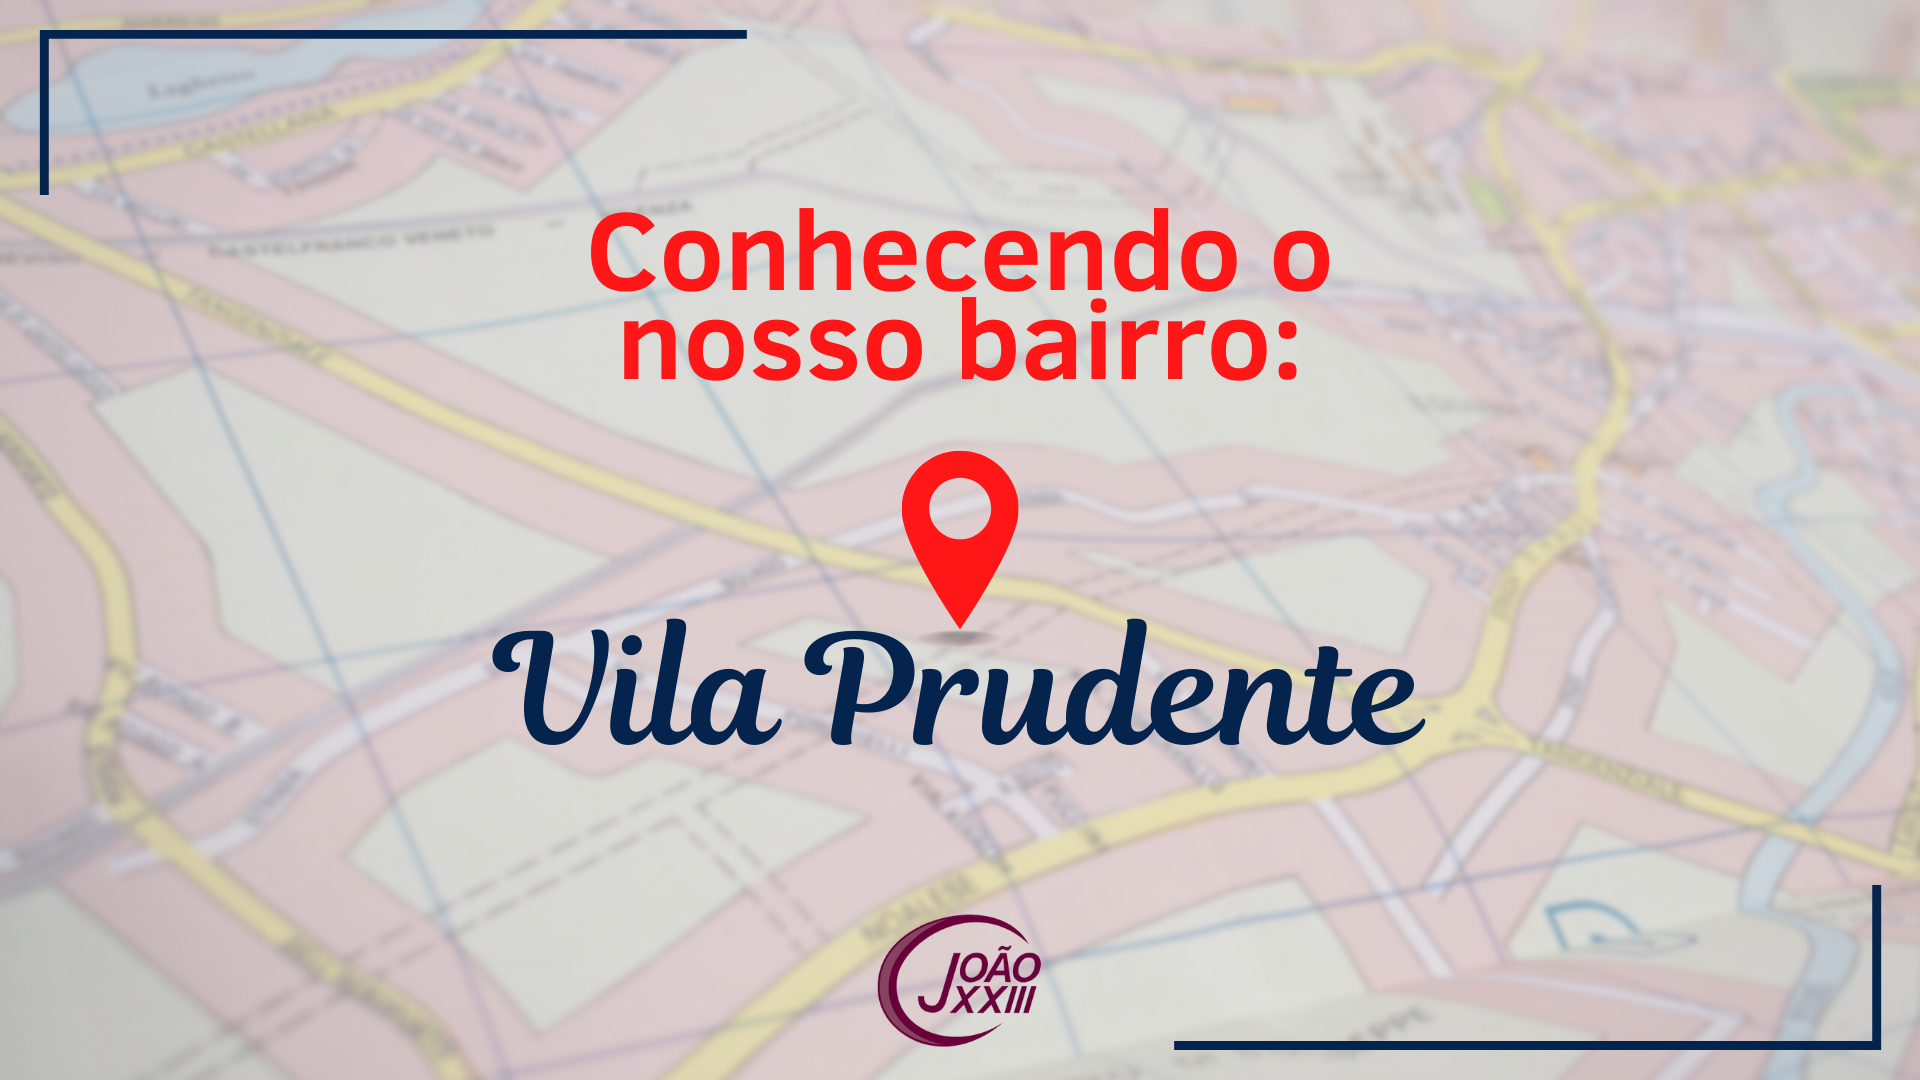 You are currently viewing Conhecendo nosso bairro: a Vila Prudente